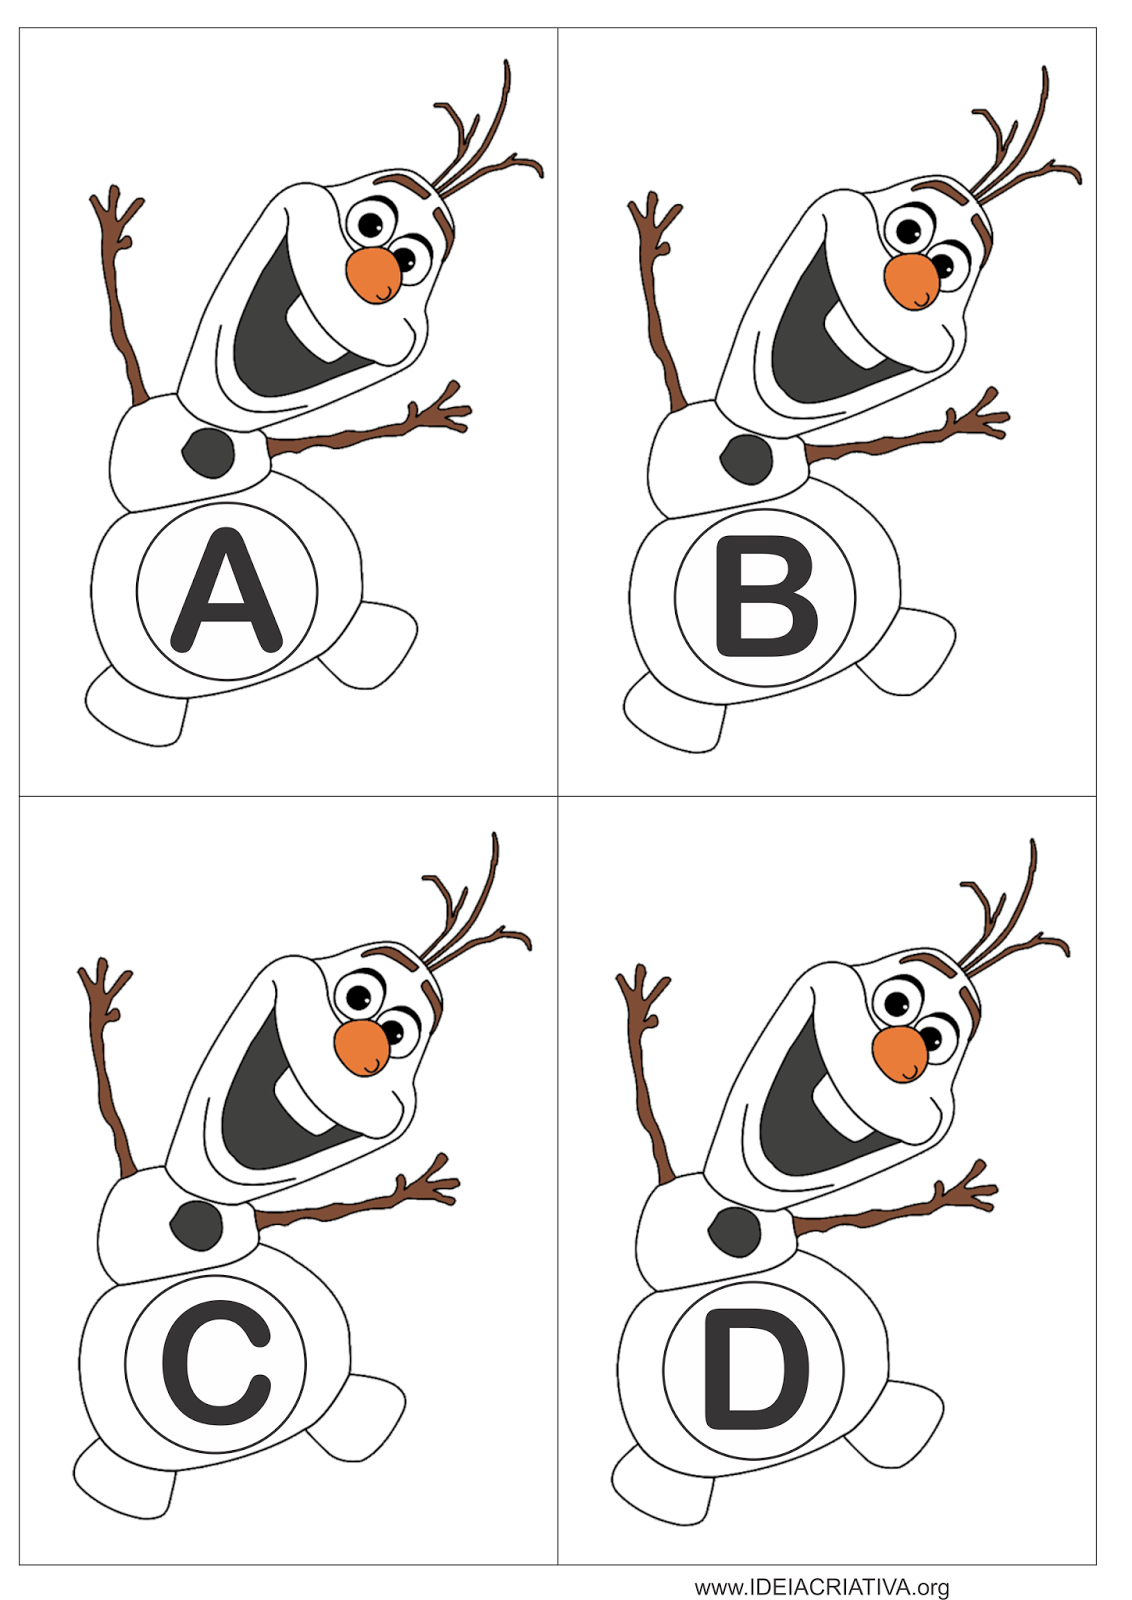 Alfabeto Olaf Frozen para jogo pedagógico